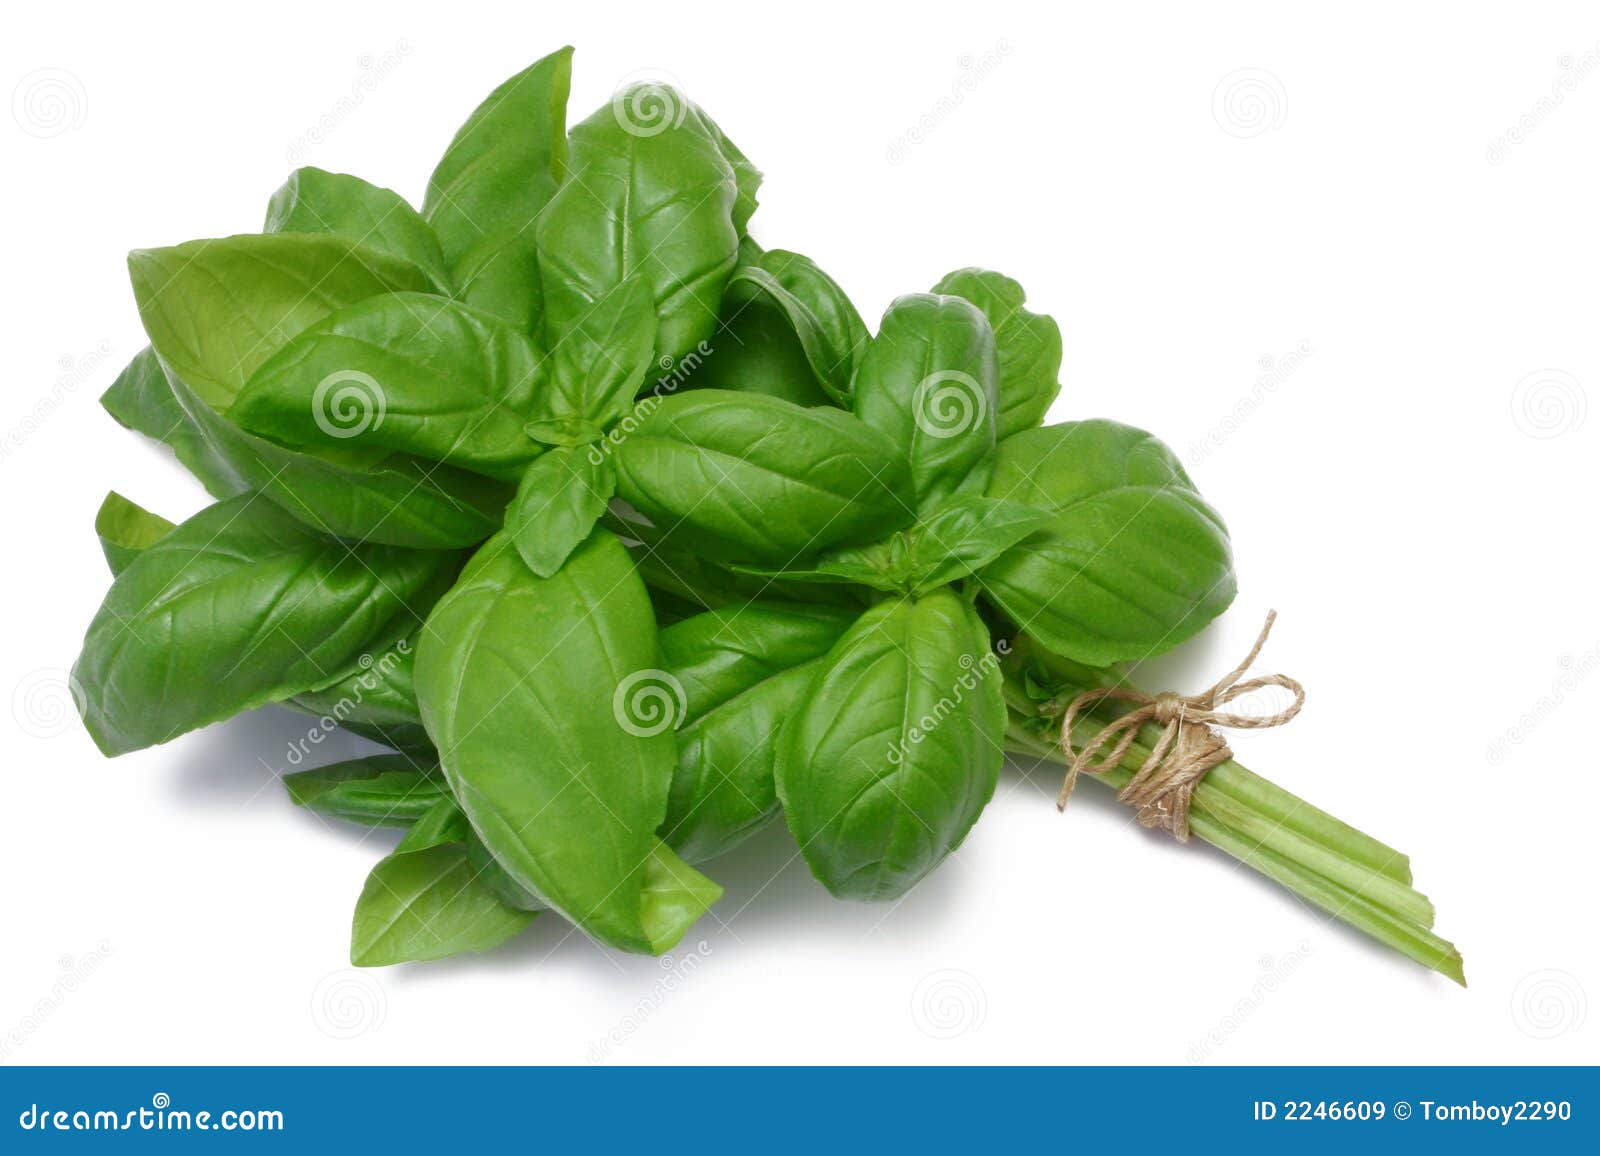 herb series basil